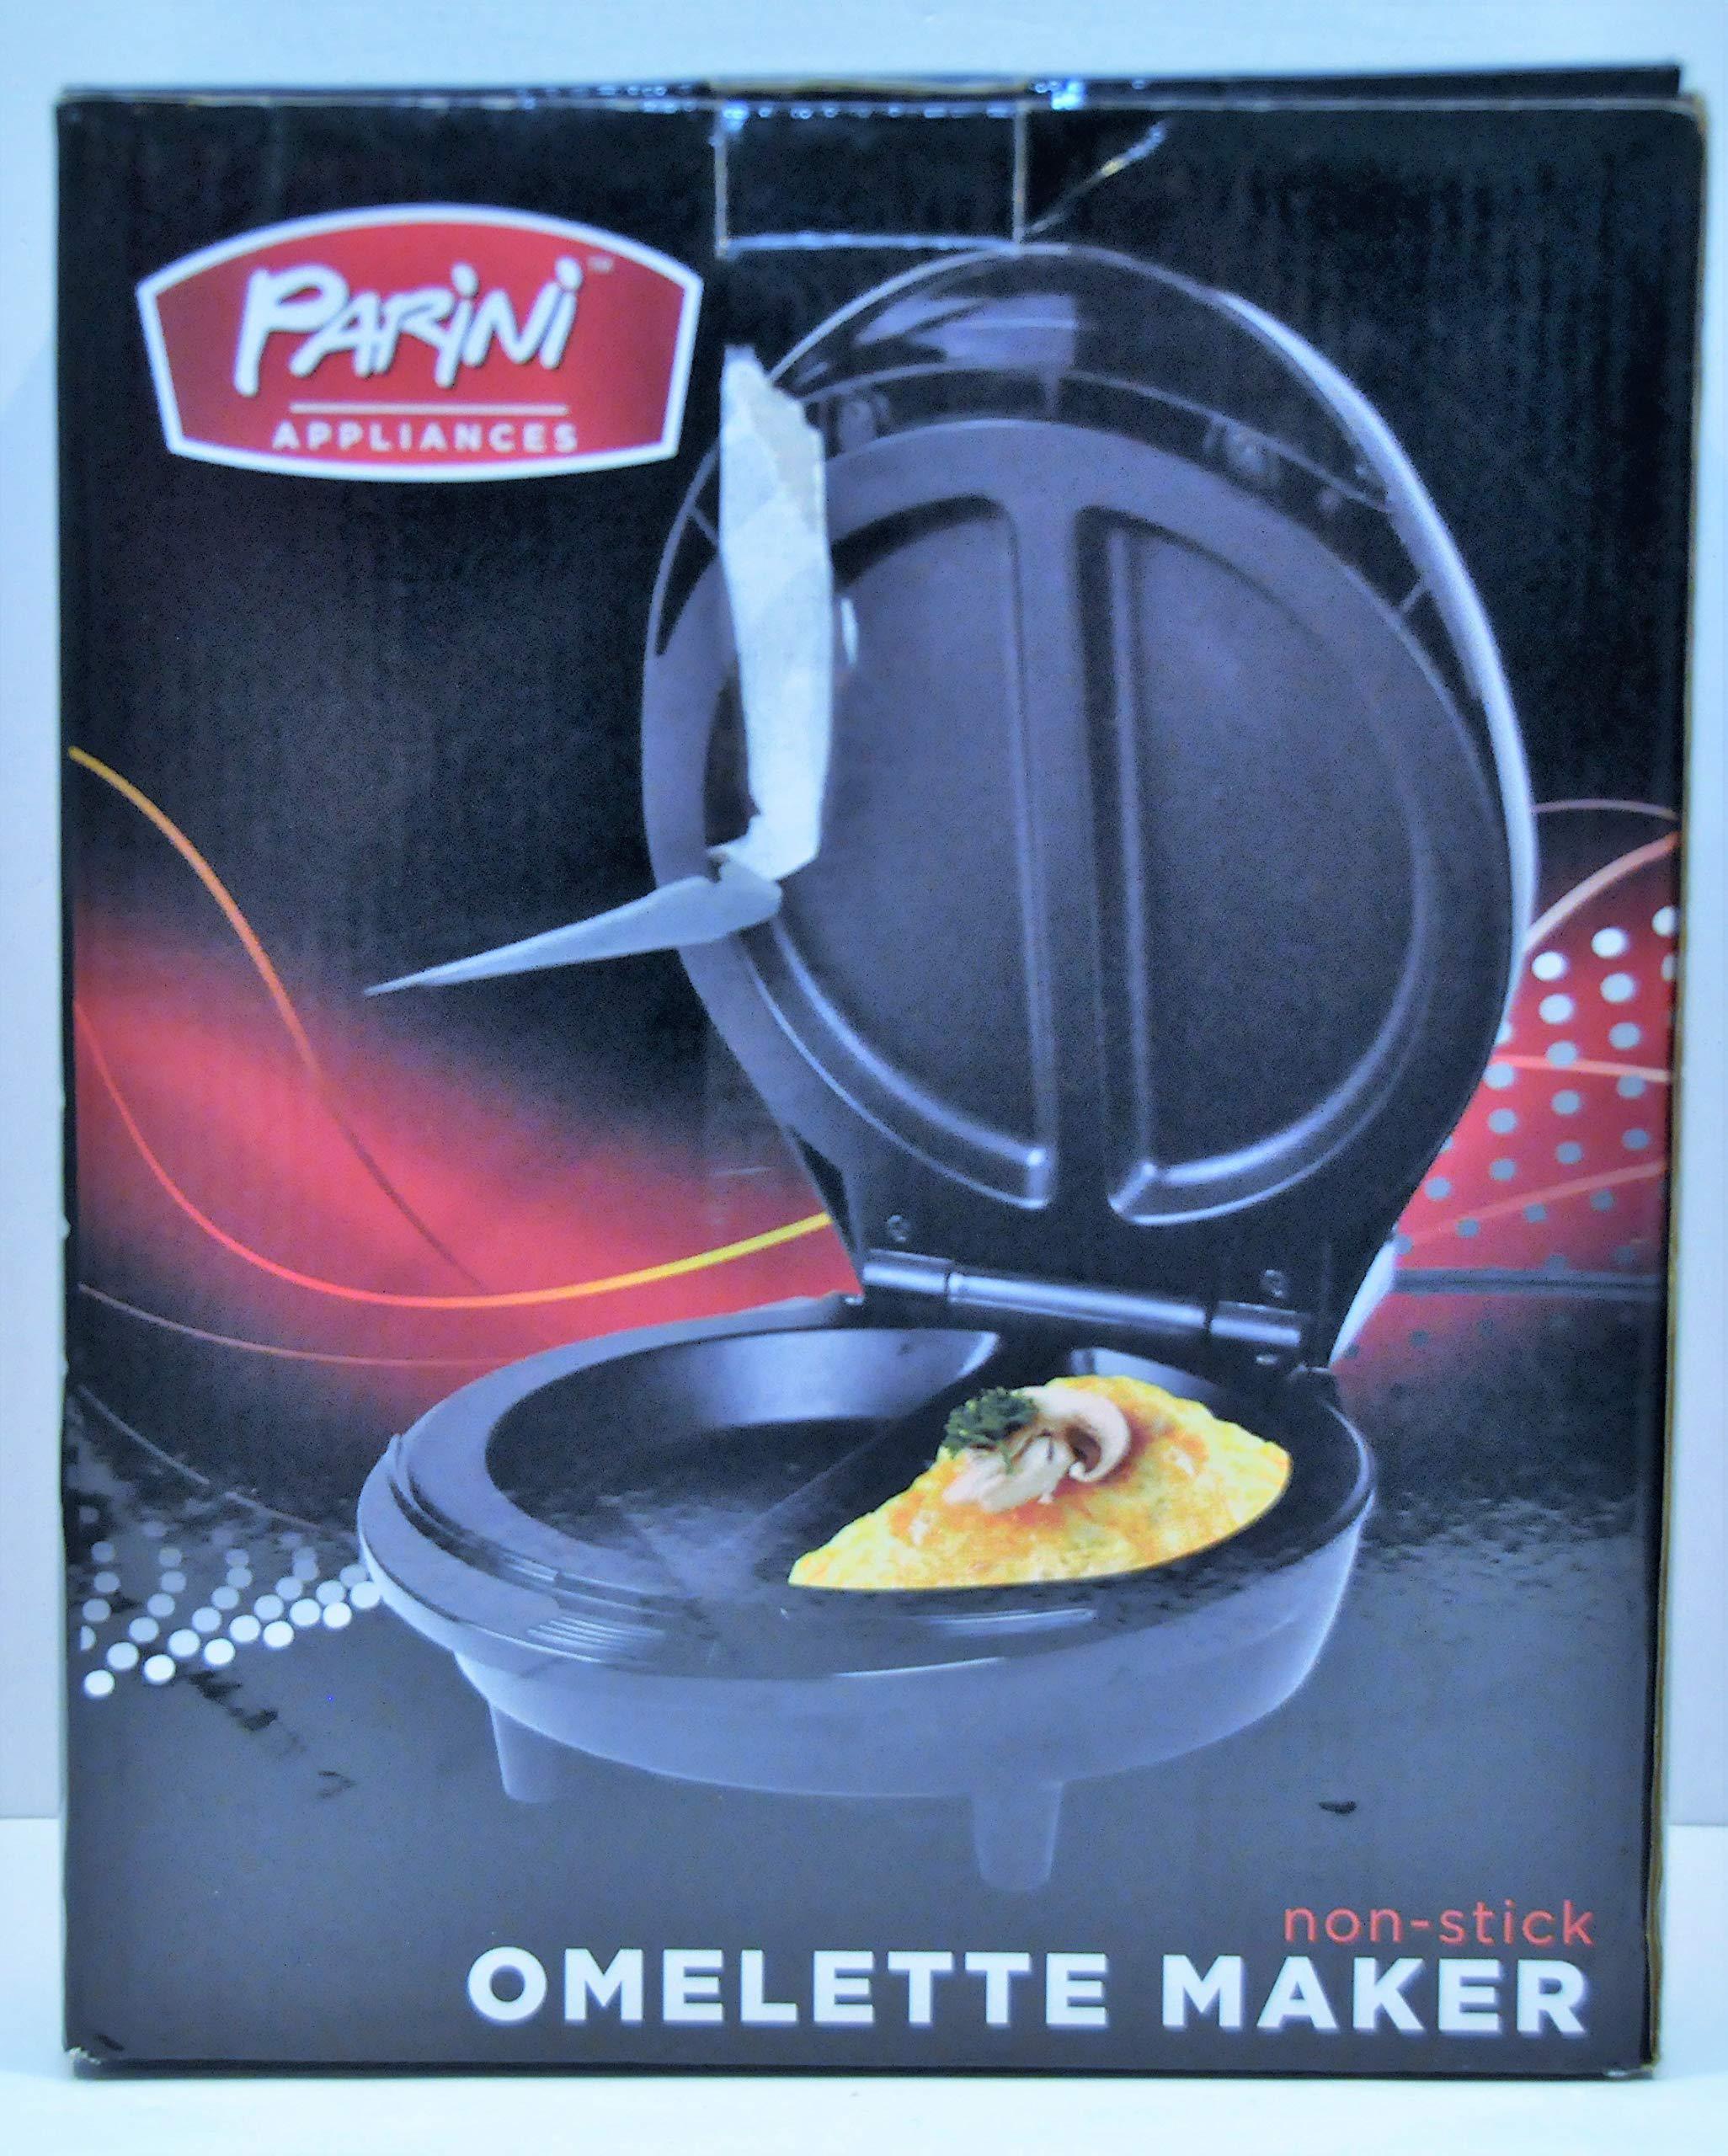 parini appliances non-stick omelette maker-black